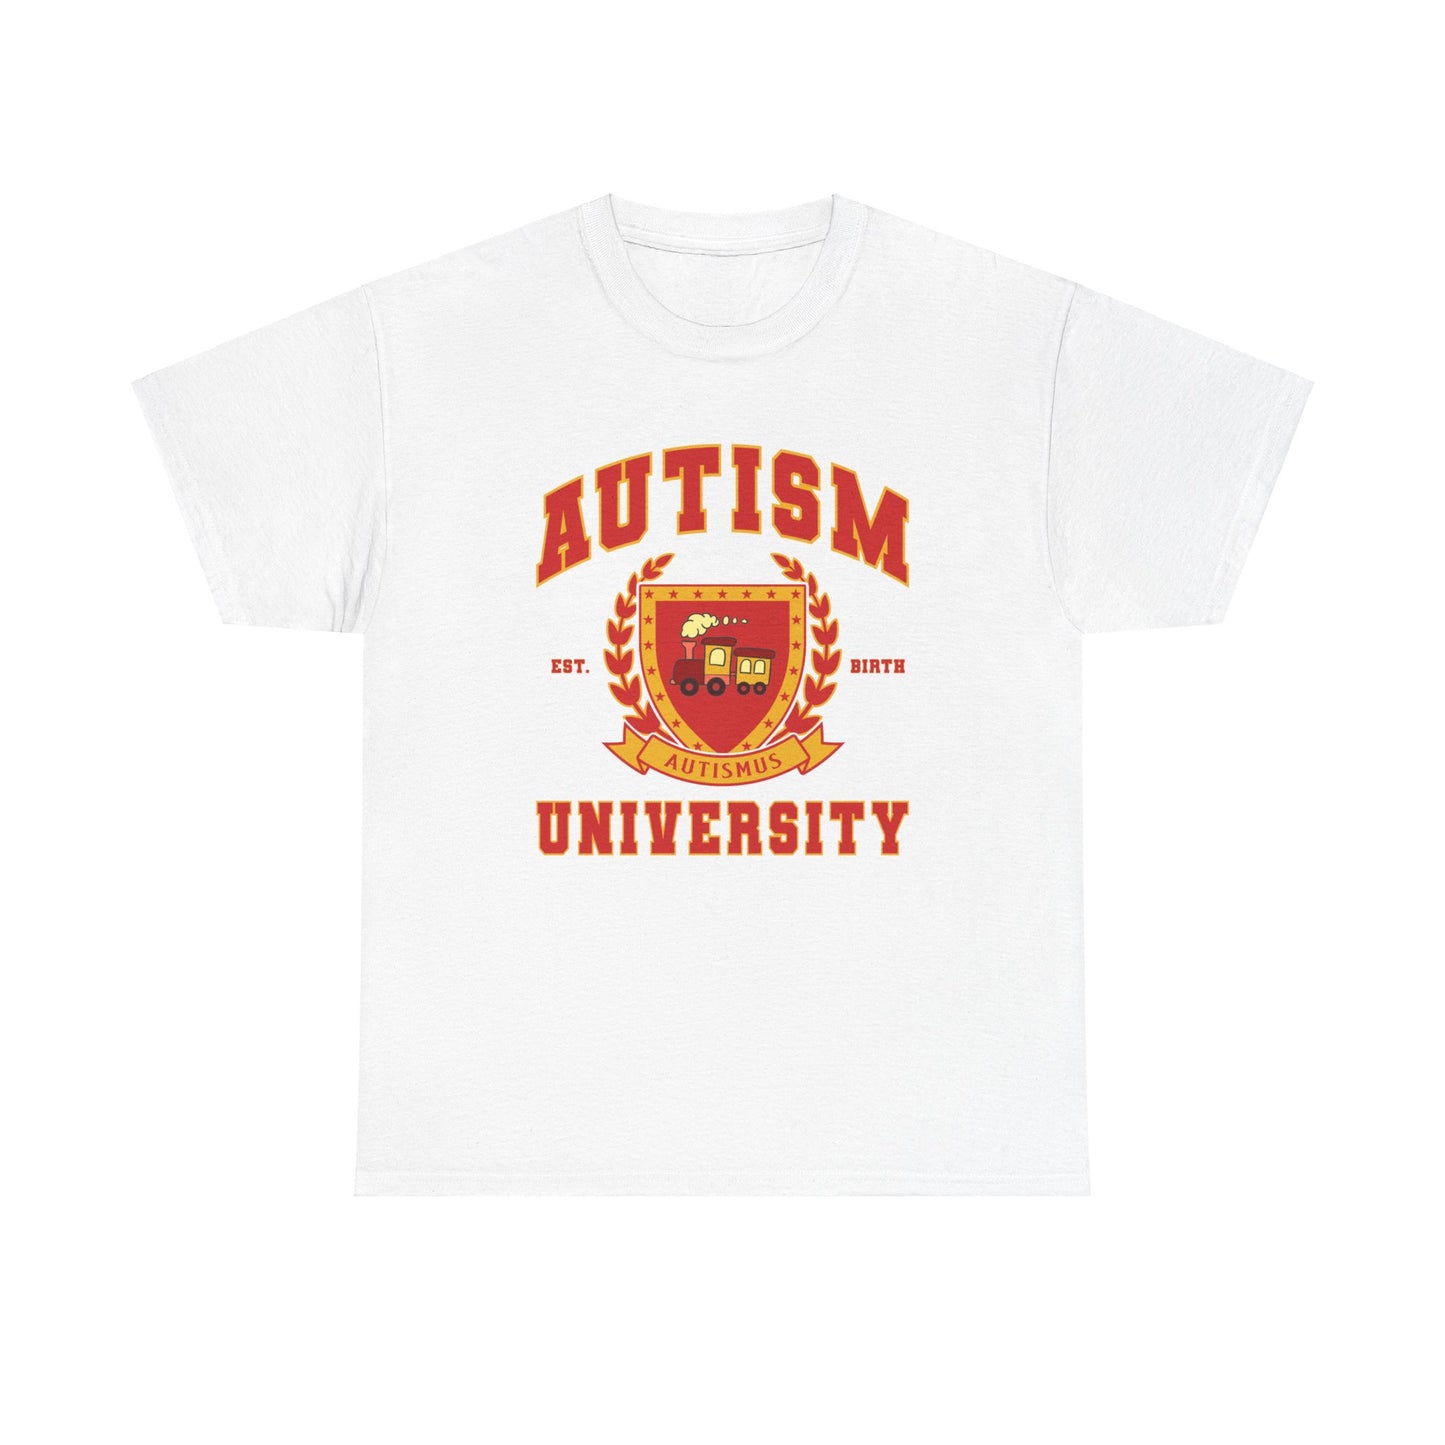 Autism University T-Shirt!